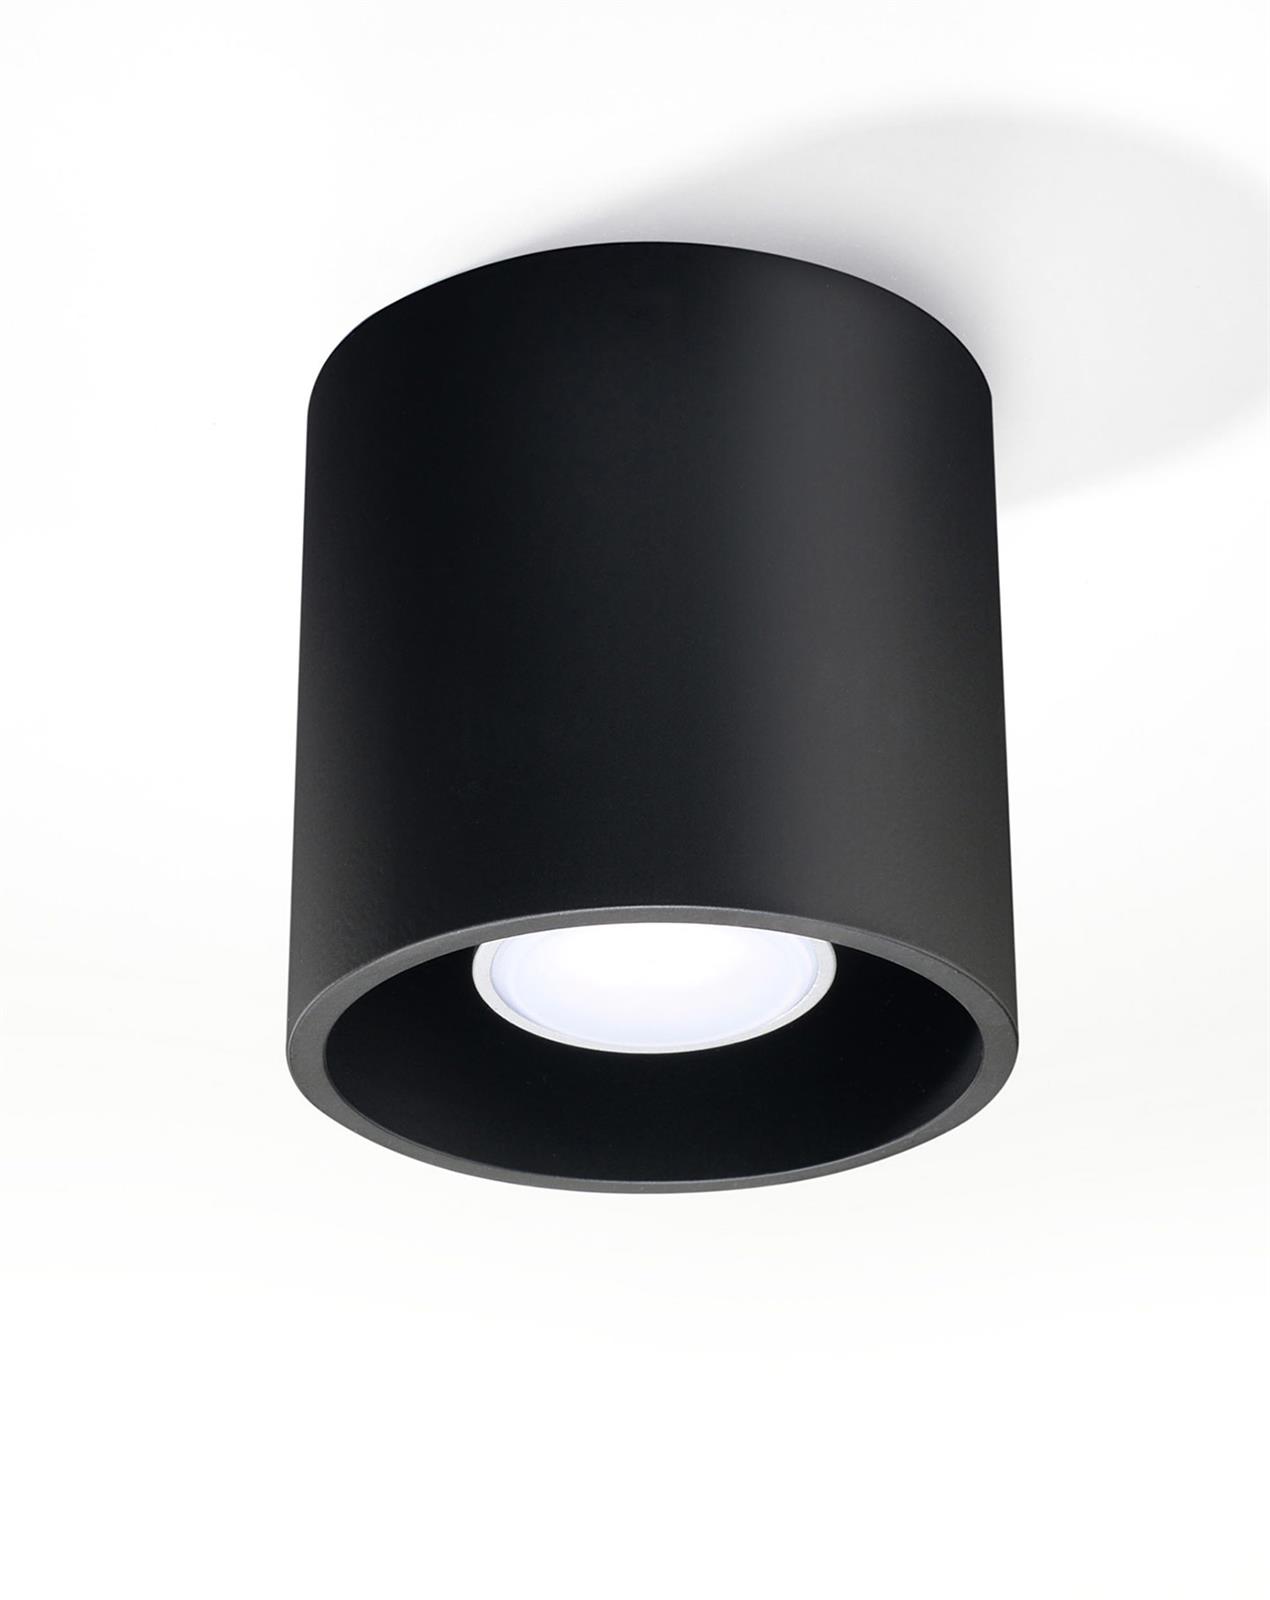 Lampa sufitowa natynkowa tuba czarna